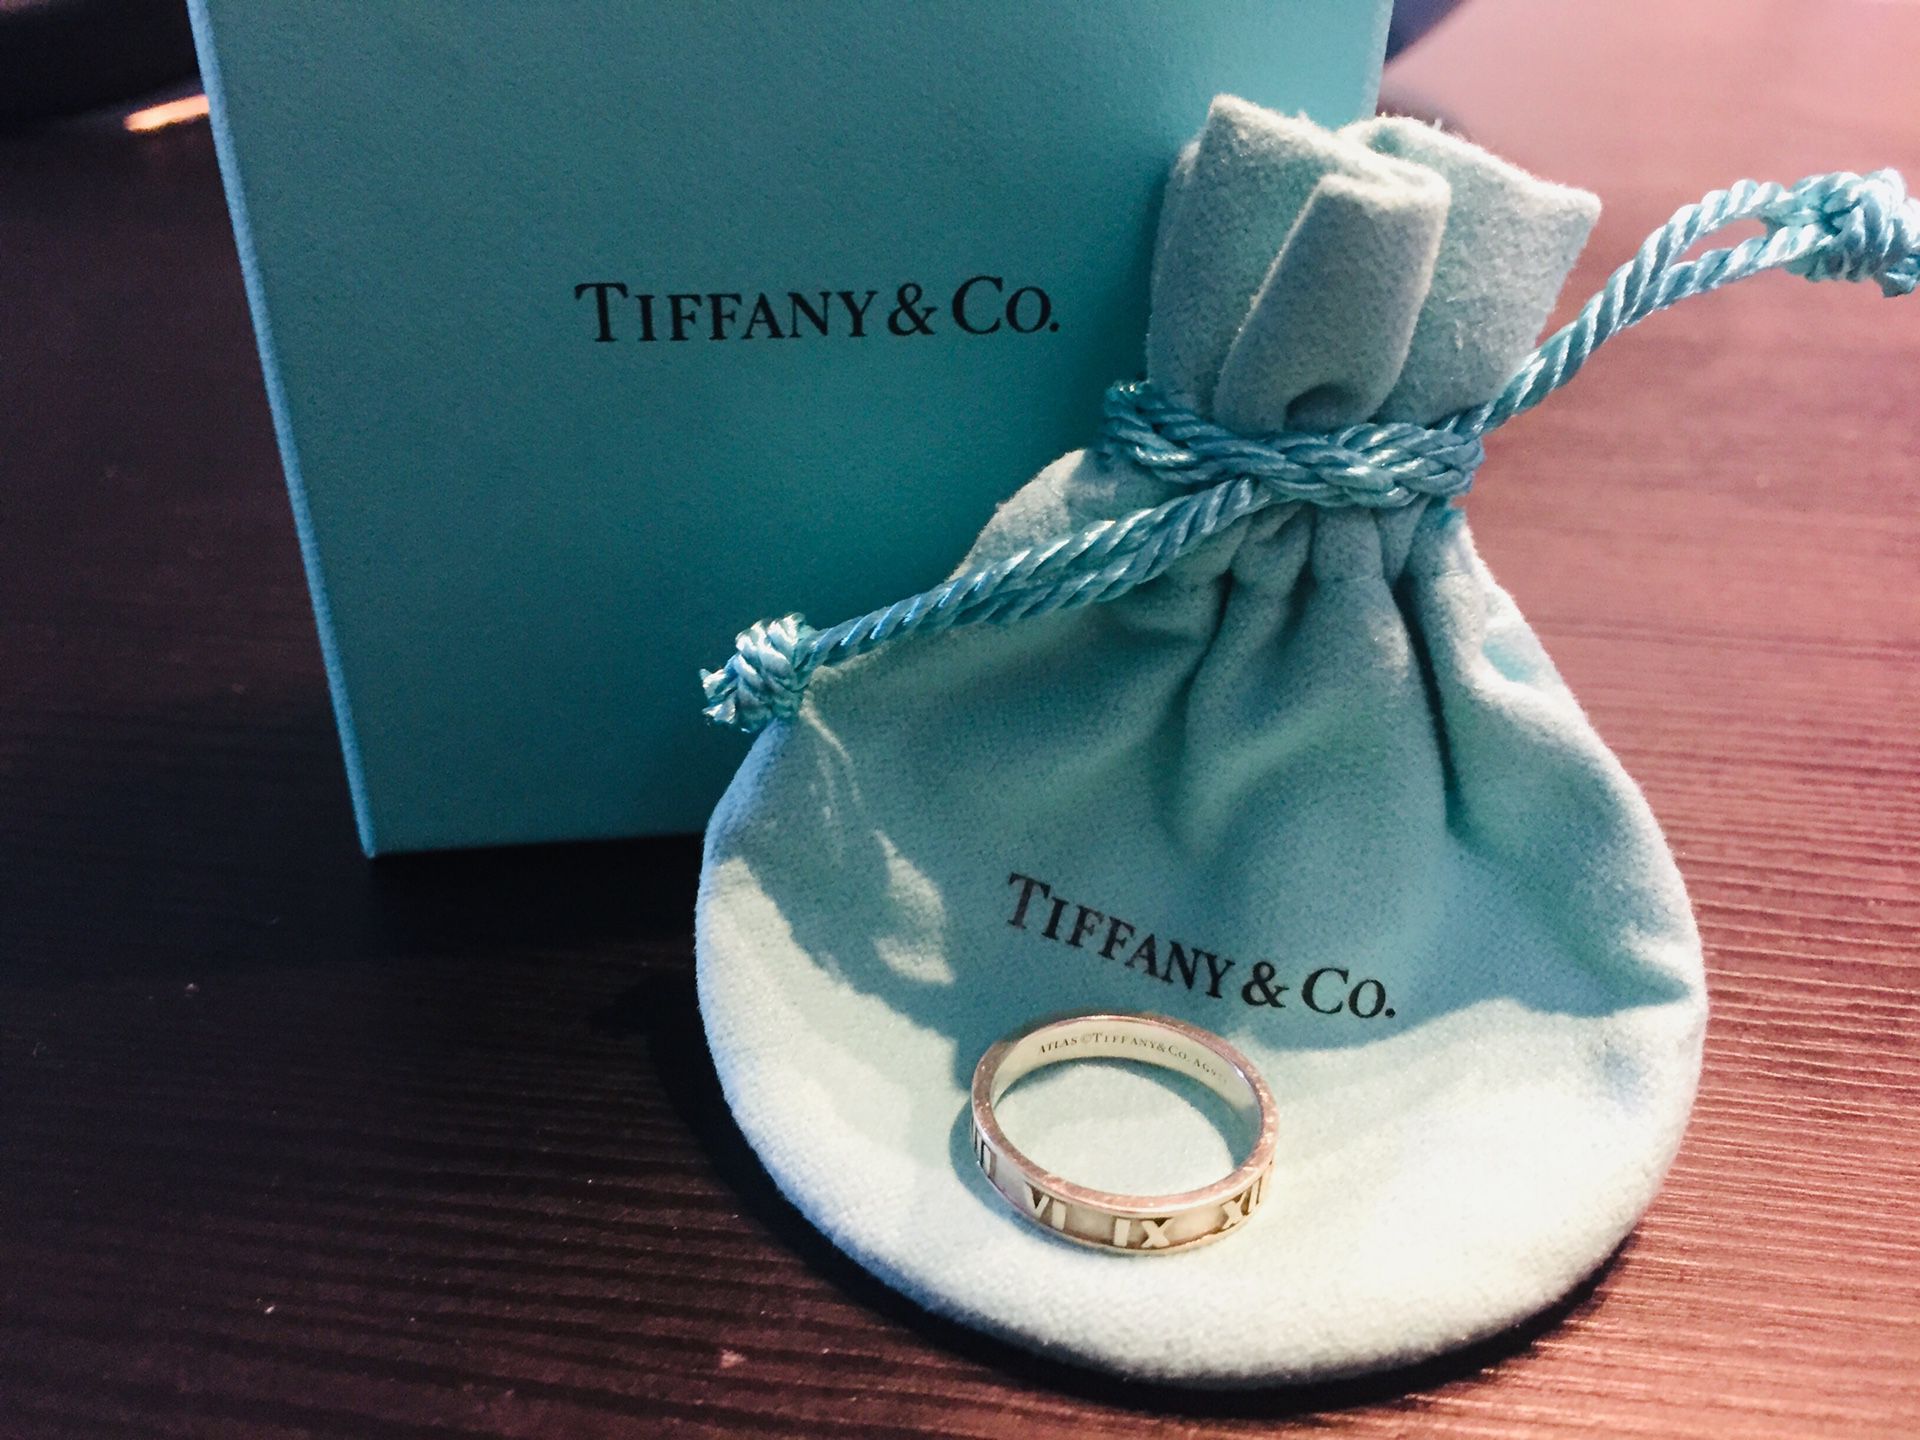 Tiffany & Co Silver Atlas Narrow Roman Numeral Ring - Size 6.5